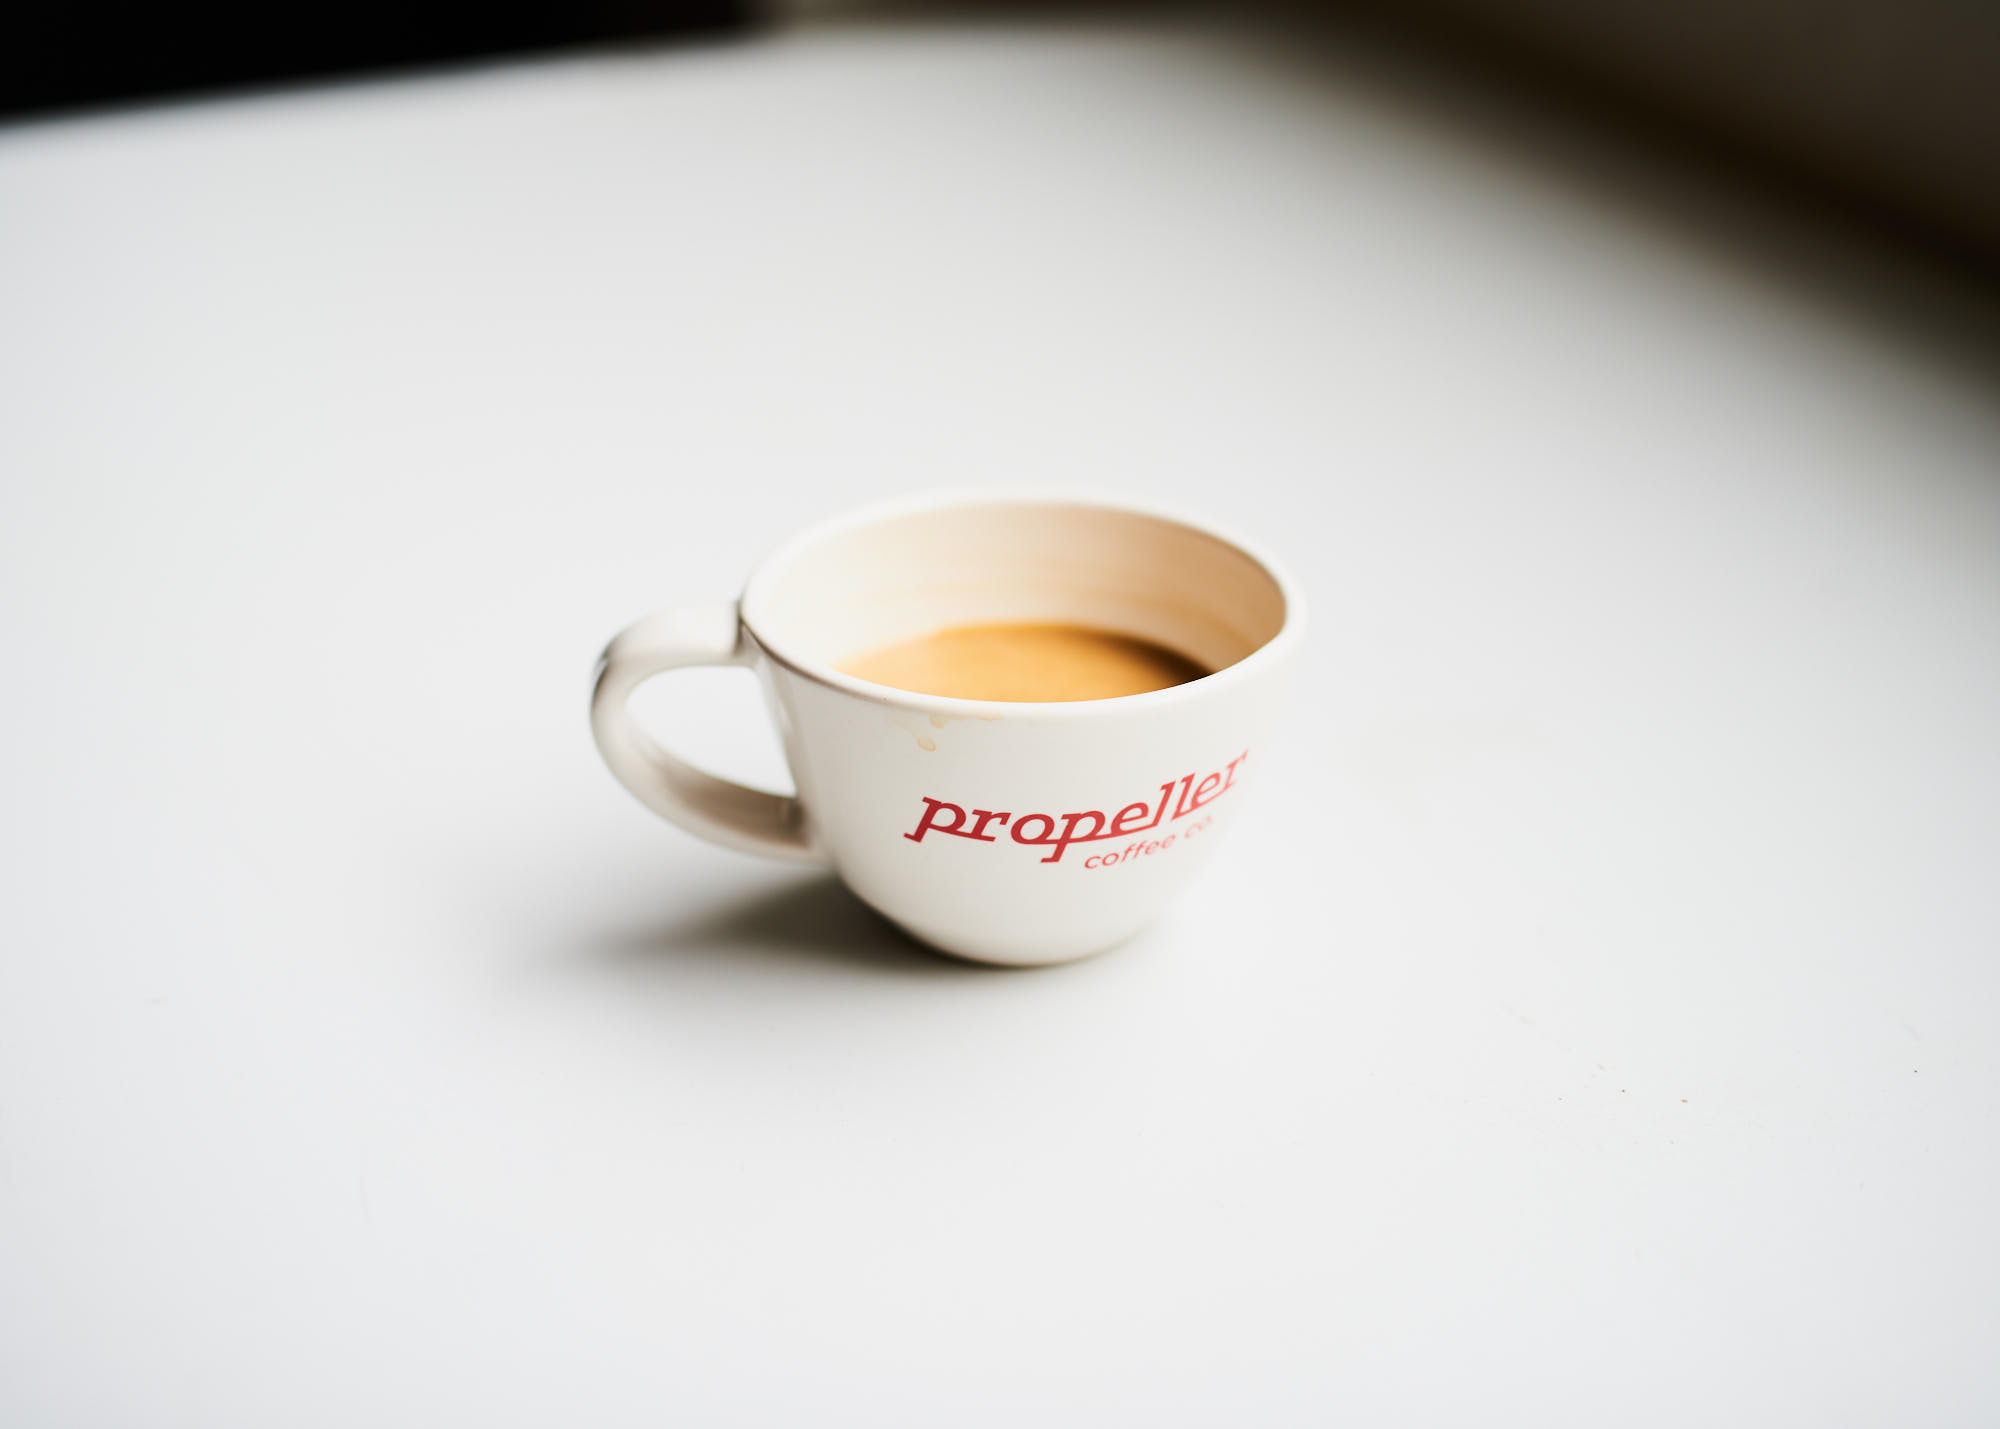 propeller-coffee-in-mug-on-table